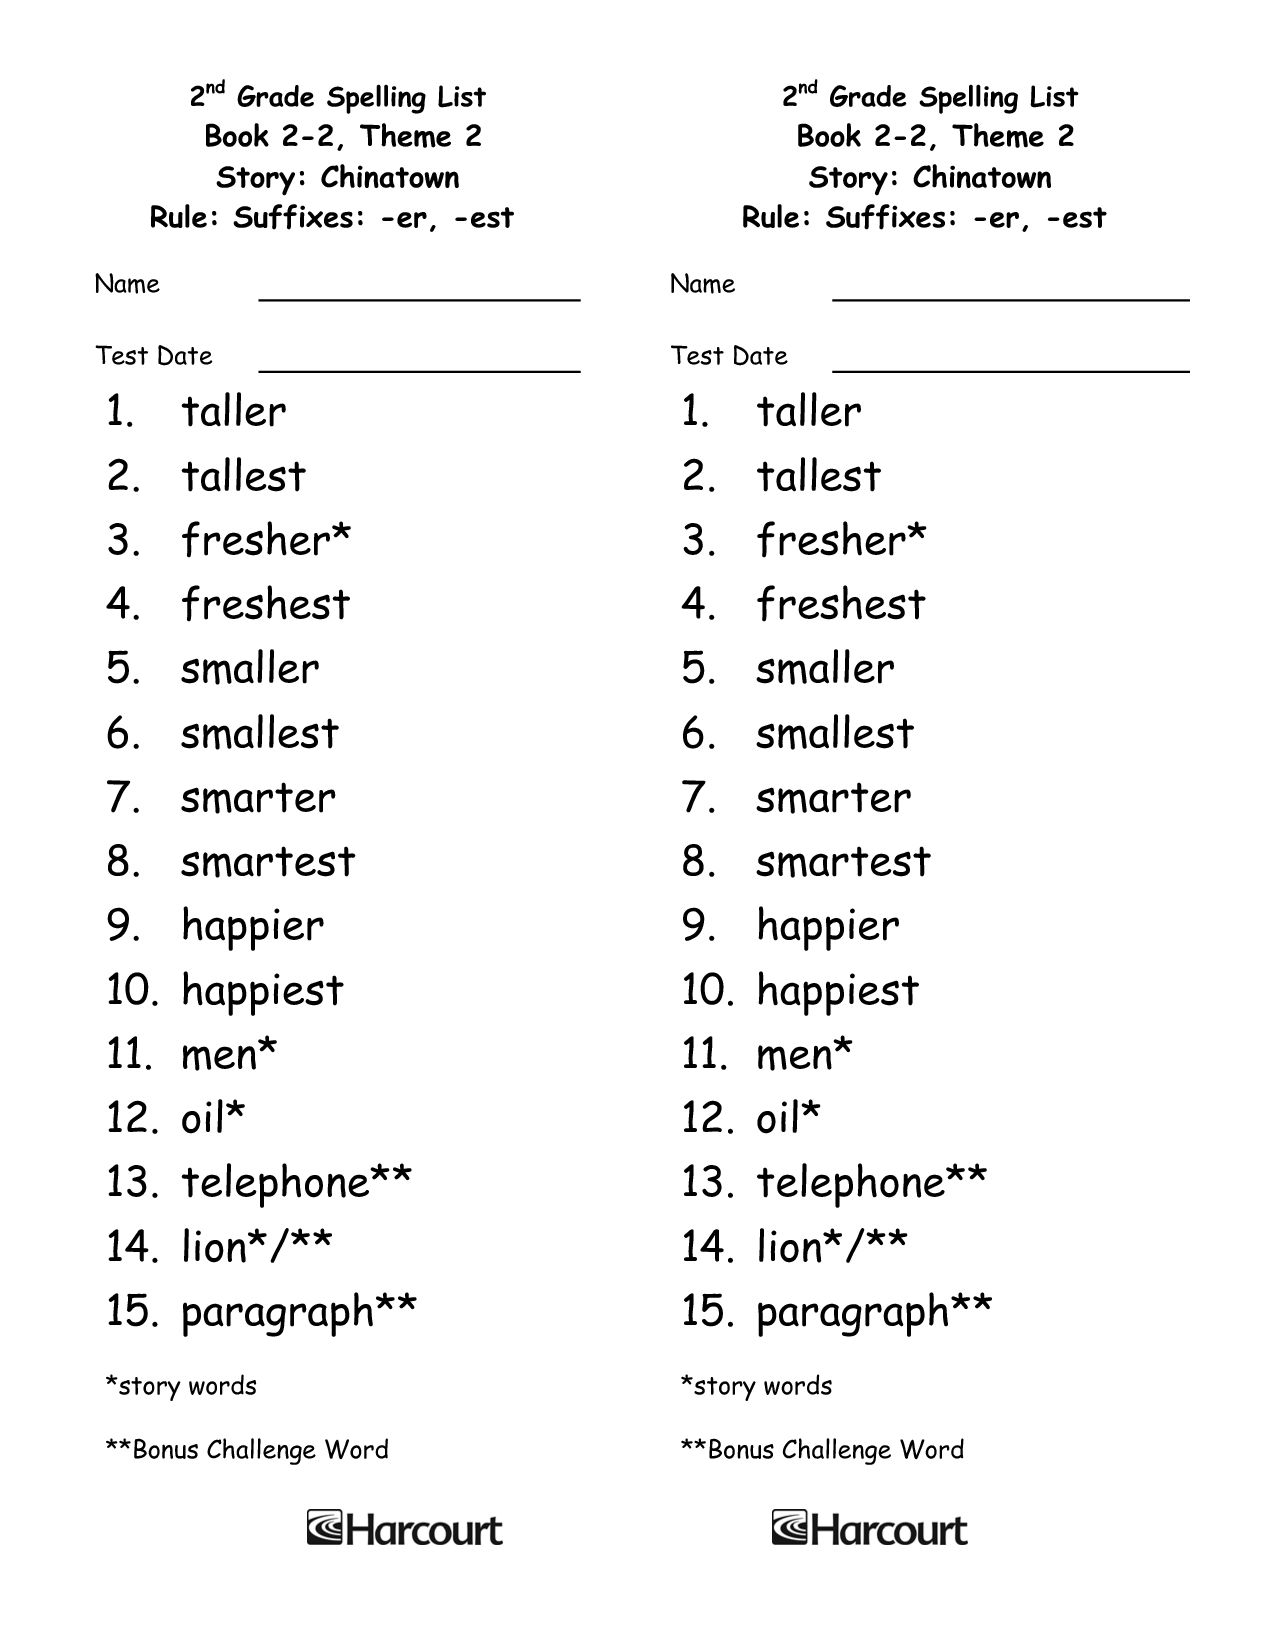 1st Grade Spelling Words Worksheet Image